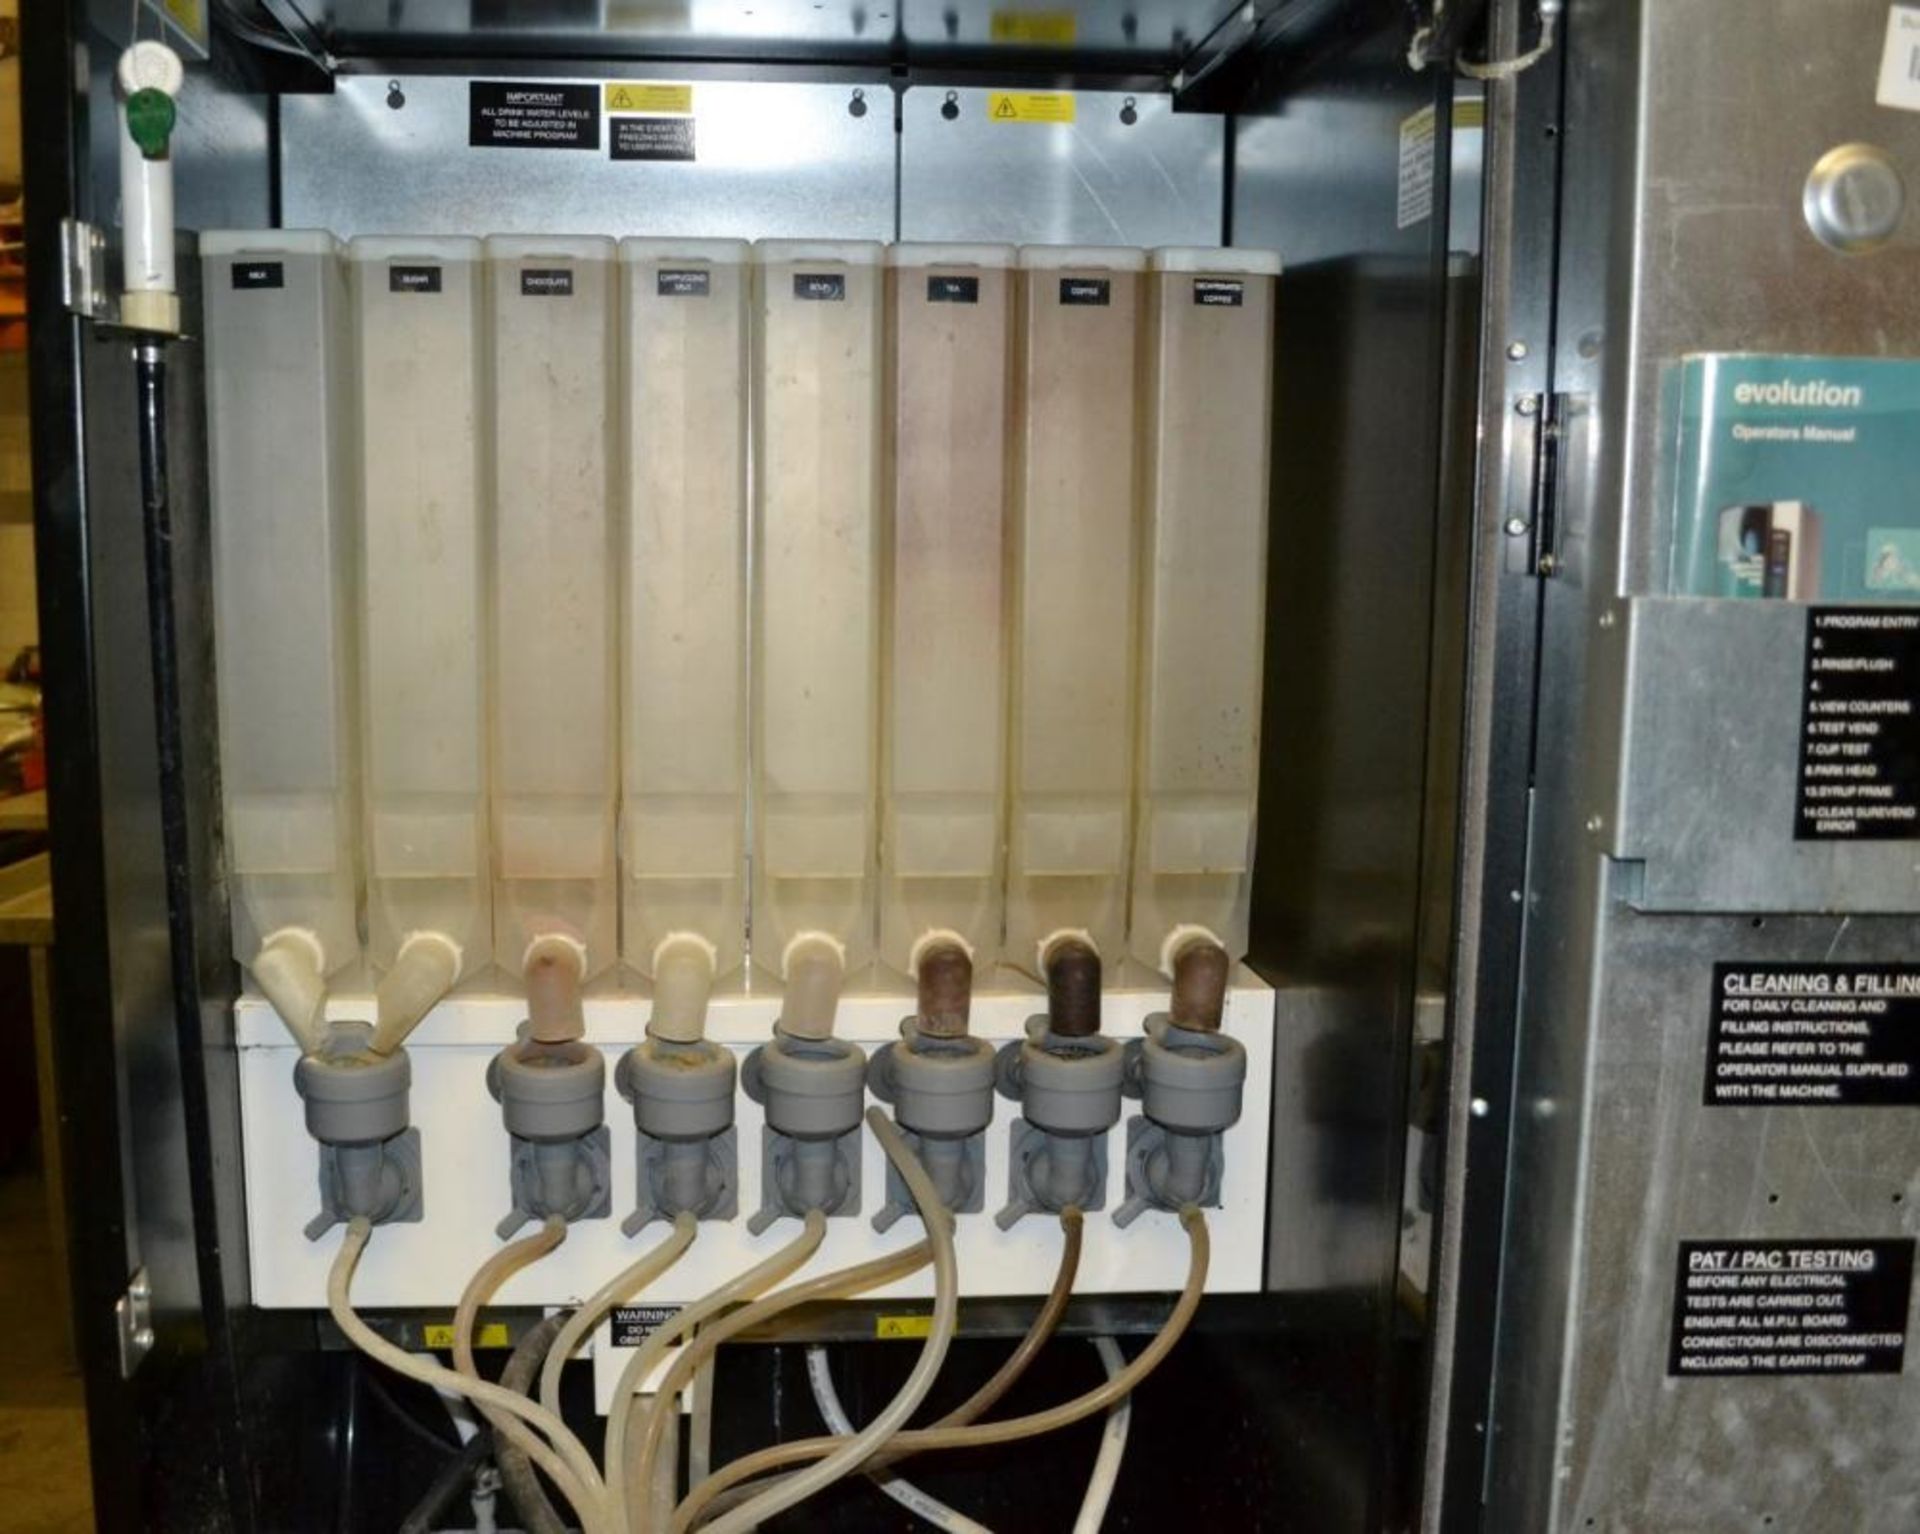 1 x Crane ""Evolution"" Hot Beverage Drinks Vending Machine With Keys - Year: 2009 - Recently Taken - Image 14 of 14